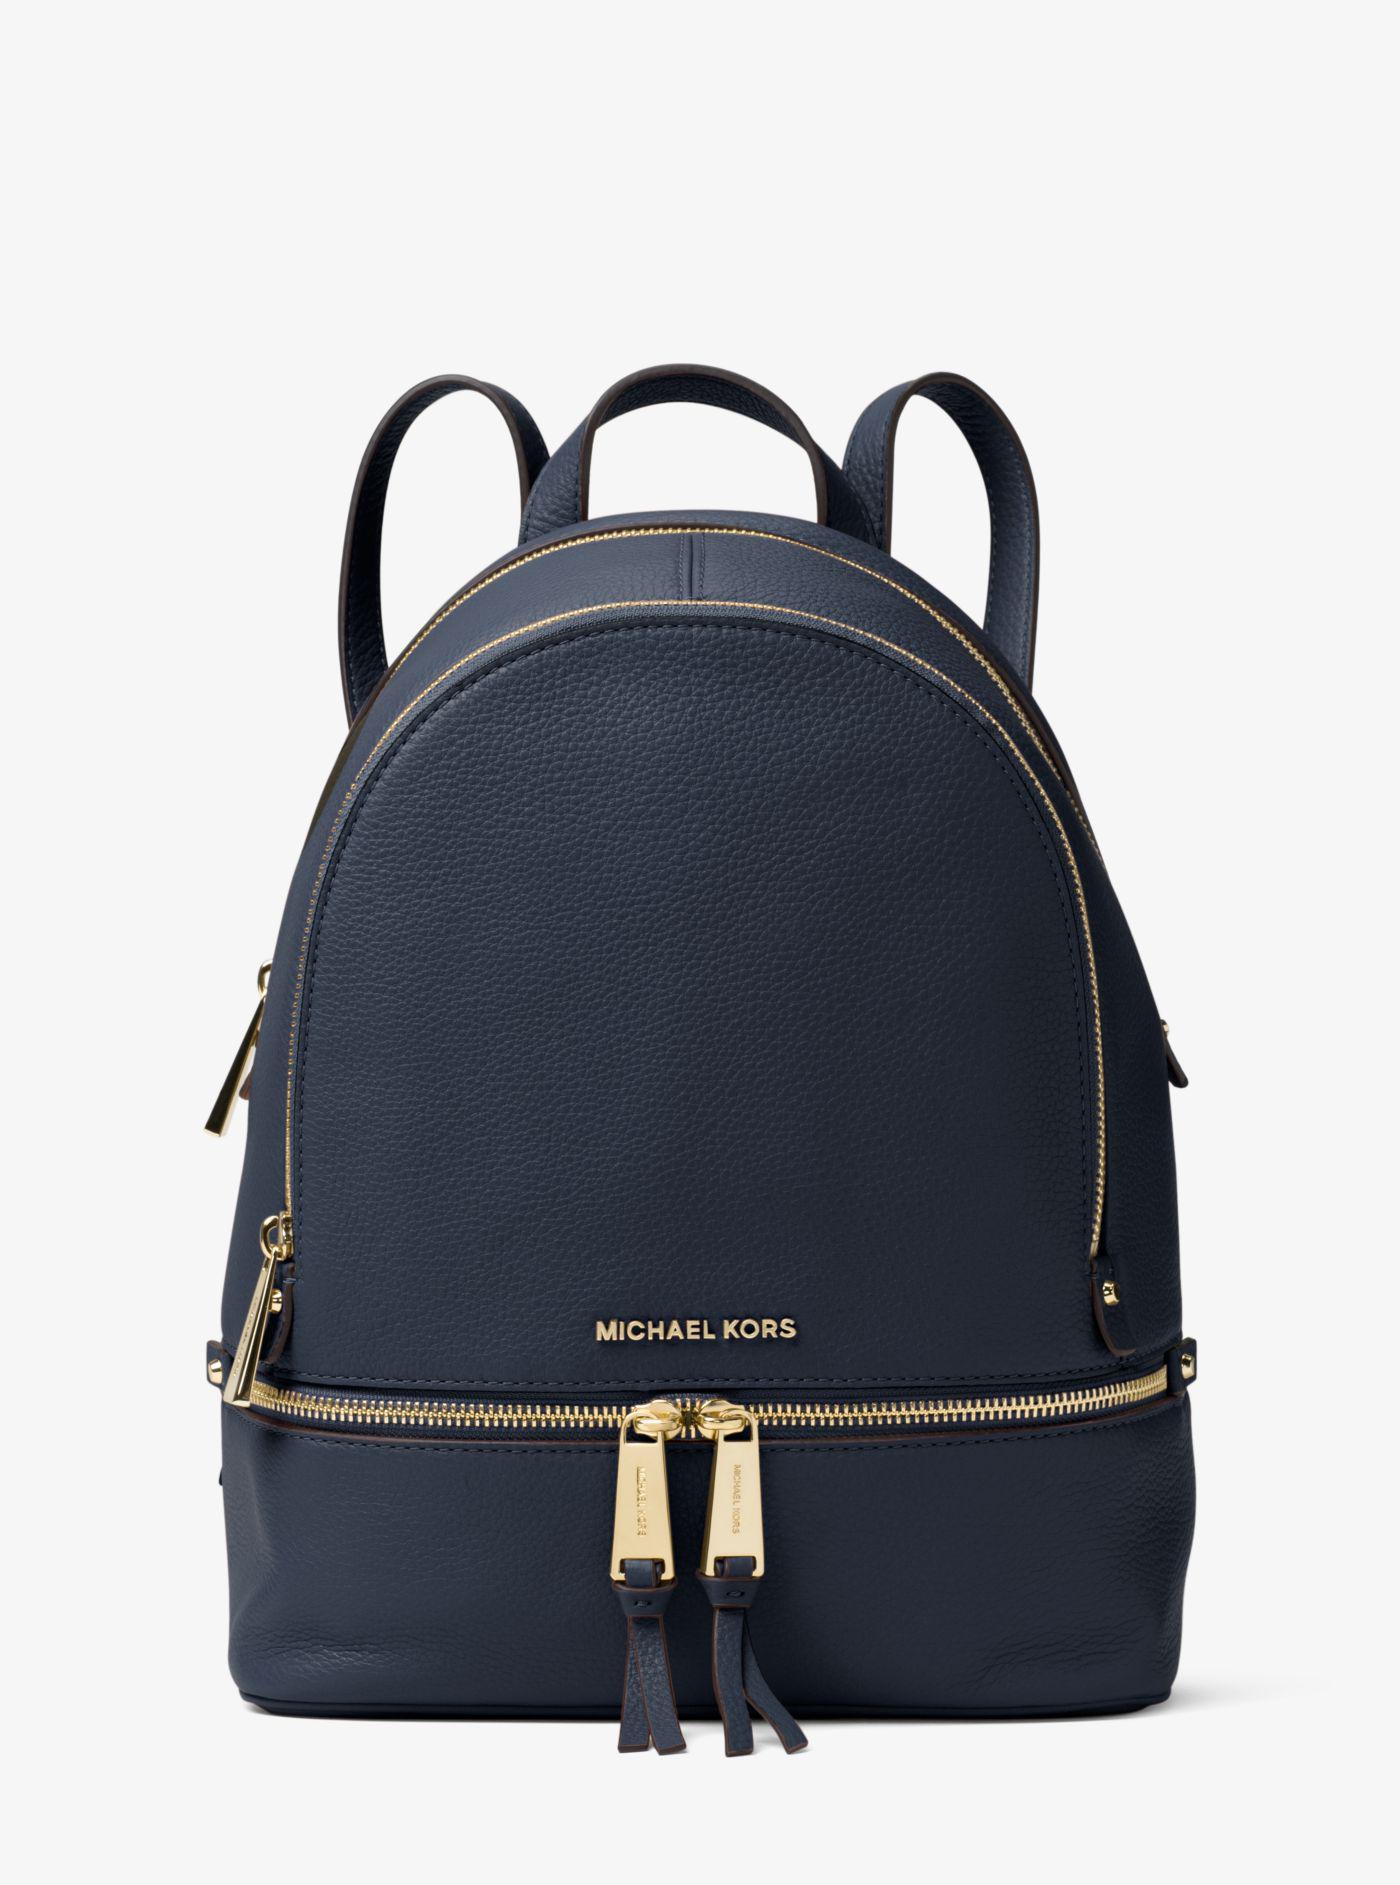 Michael Kors Rhea Medium Leather Backpack in Blue - Lyst